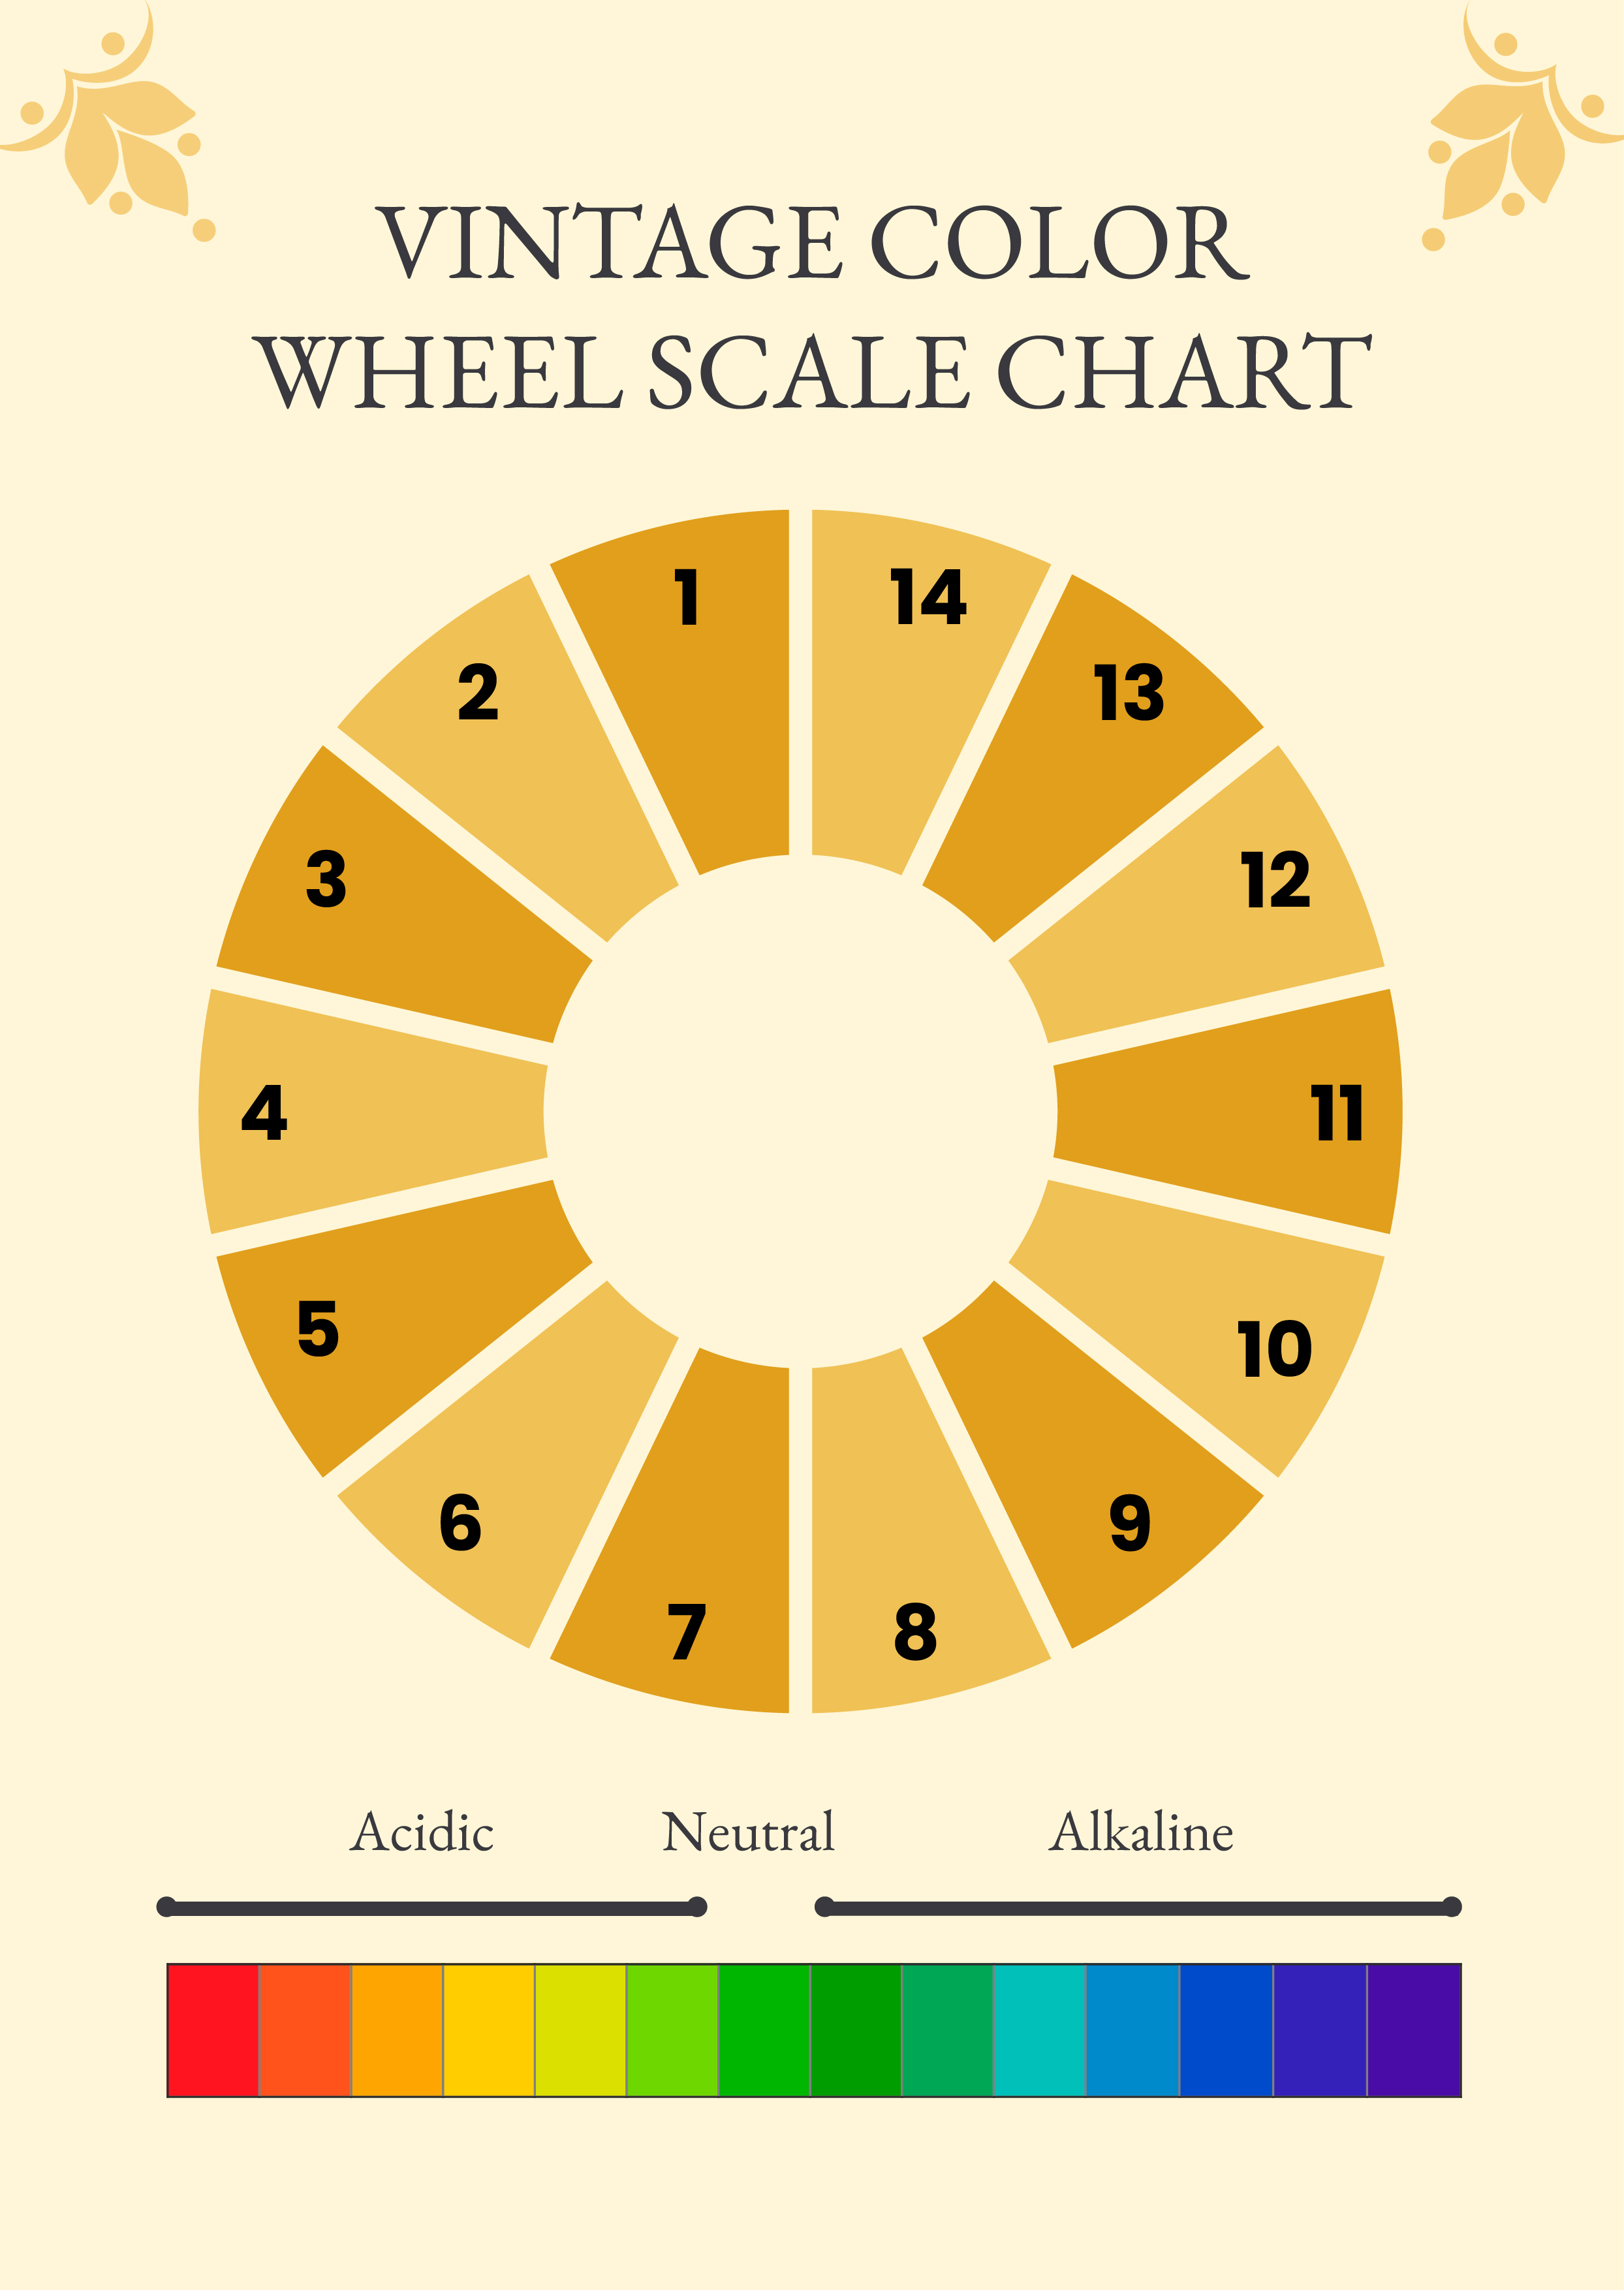 Free Digital Color Wheel Chart - Download in PDF, Illustrator